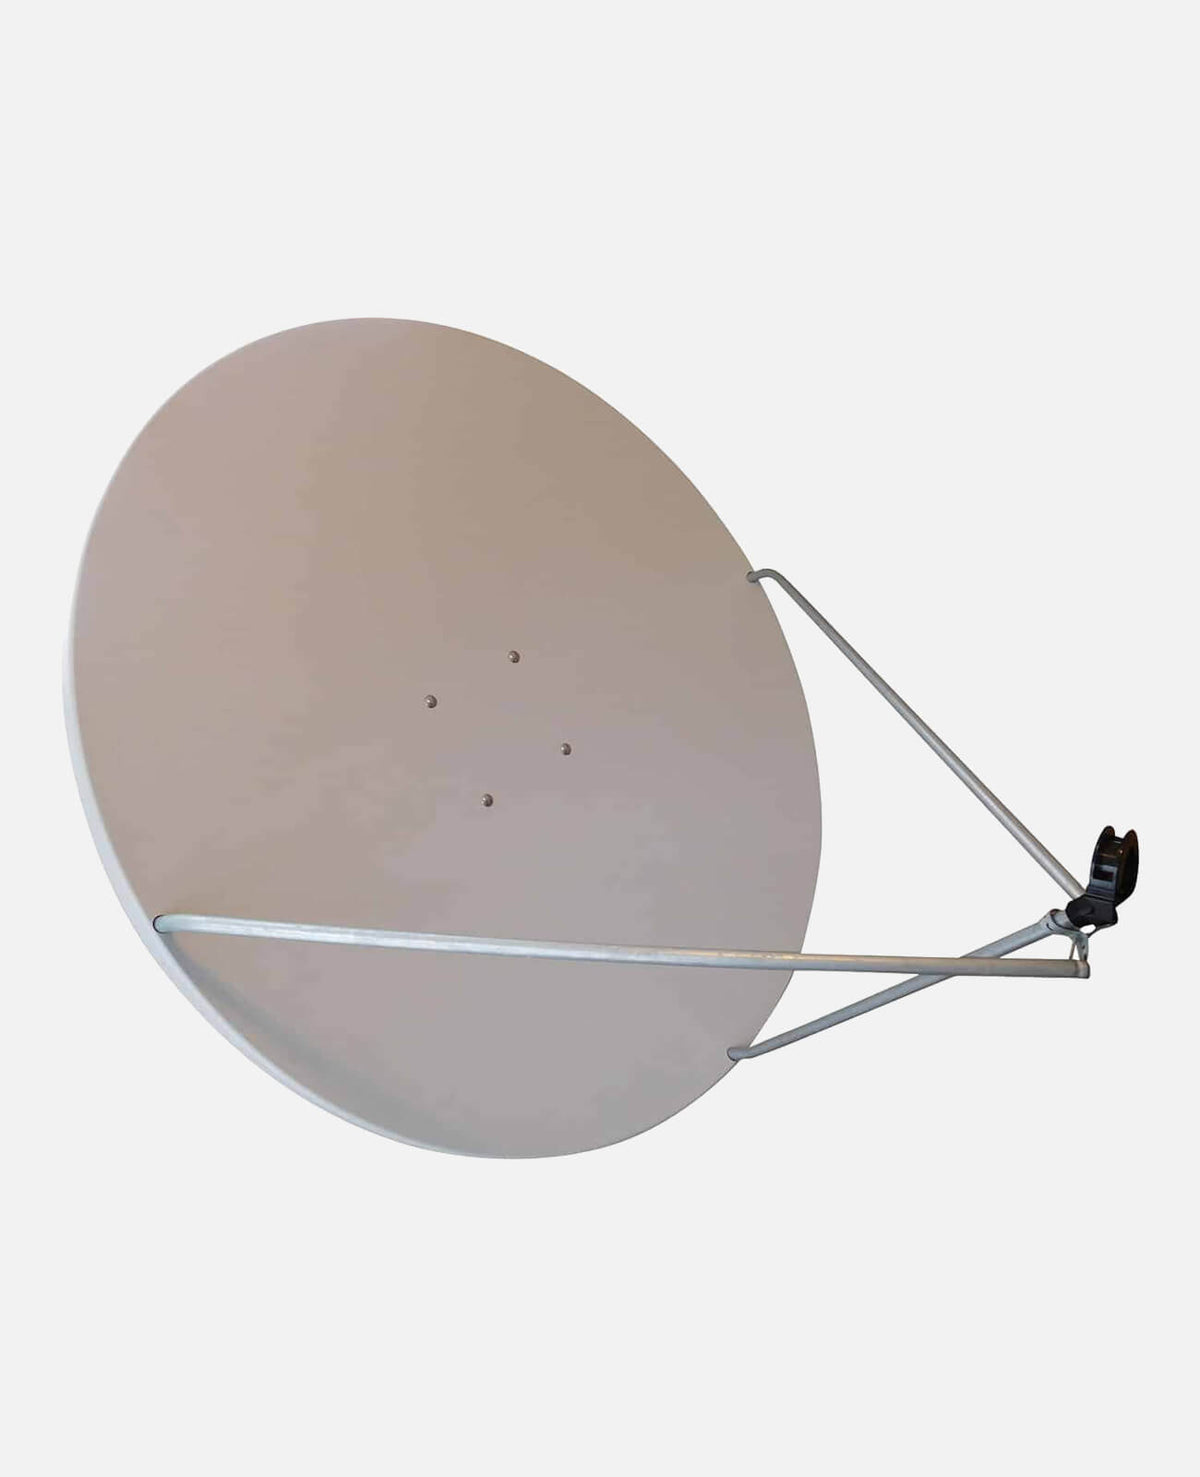 Skyware Global 1.2 Meter Dish, 120 cm Offset Satellite Dish Antenna, Receive Only, (Type 120)